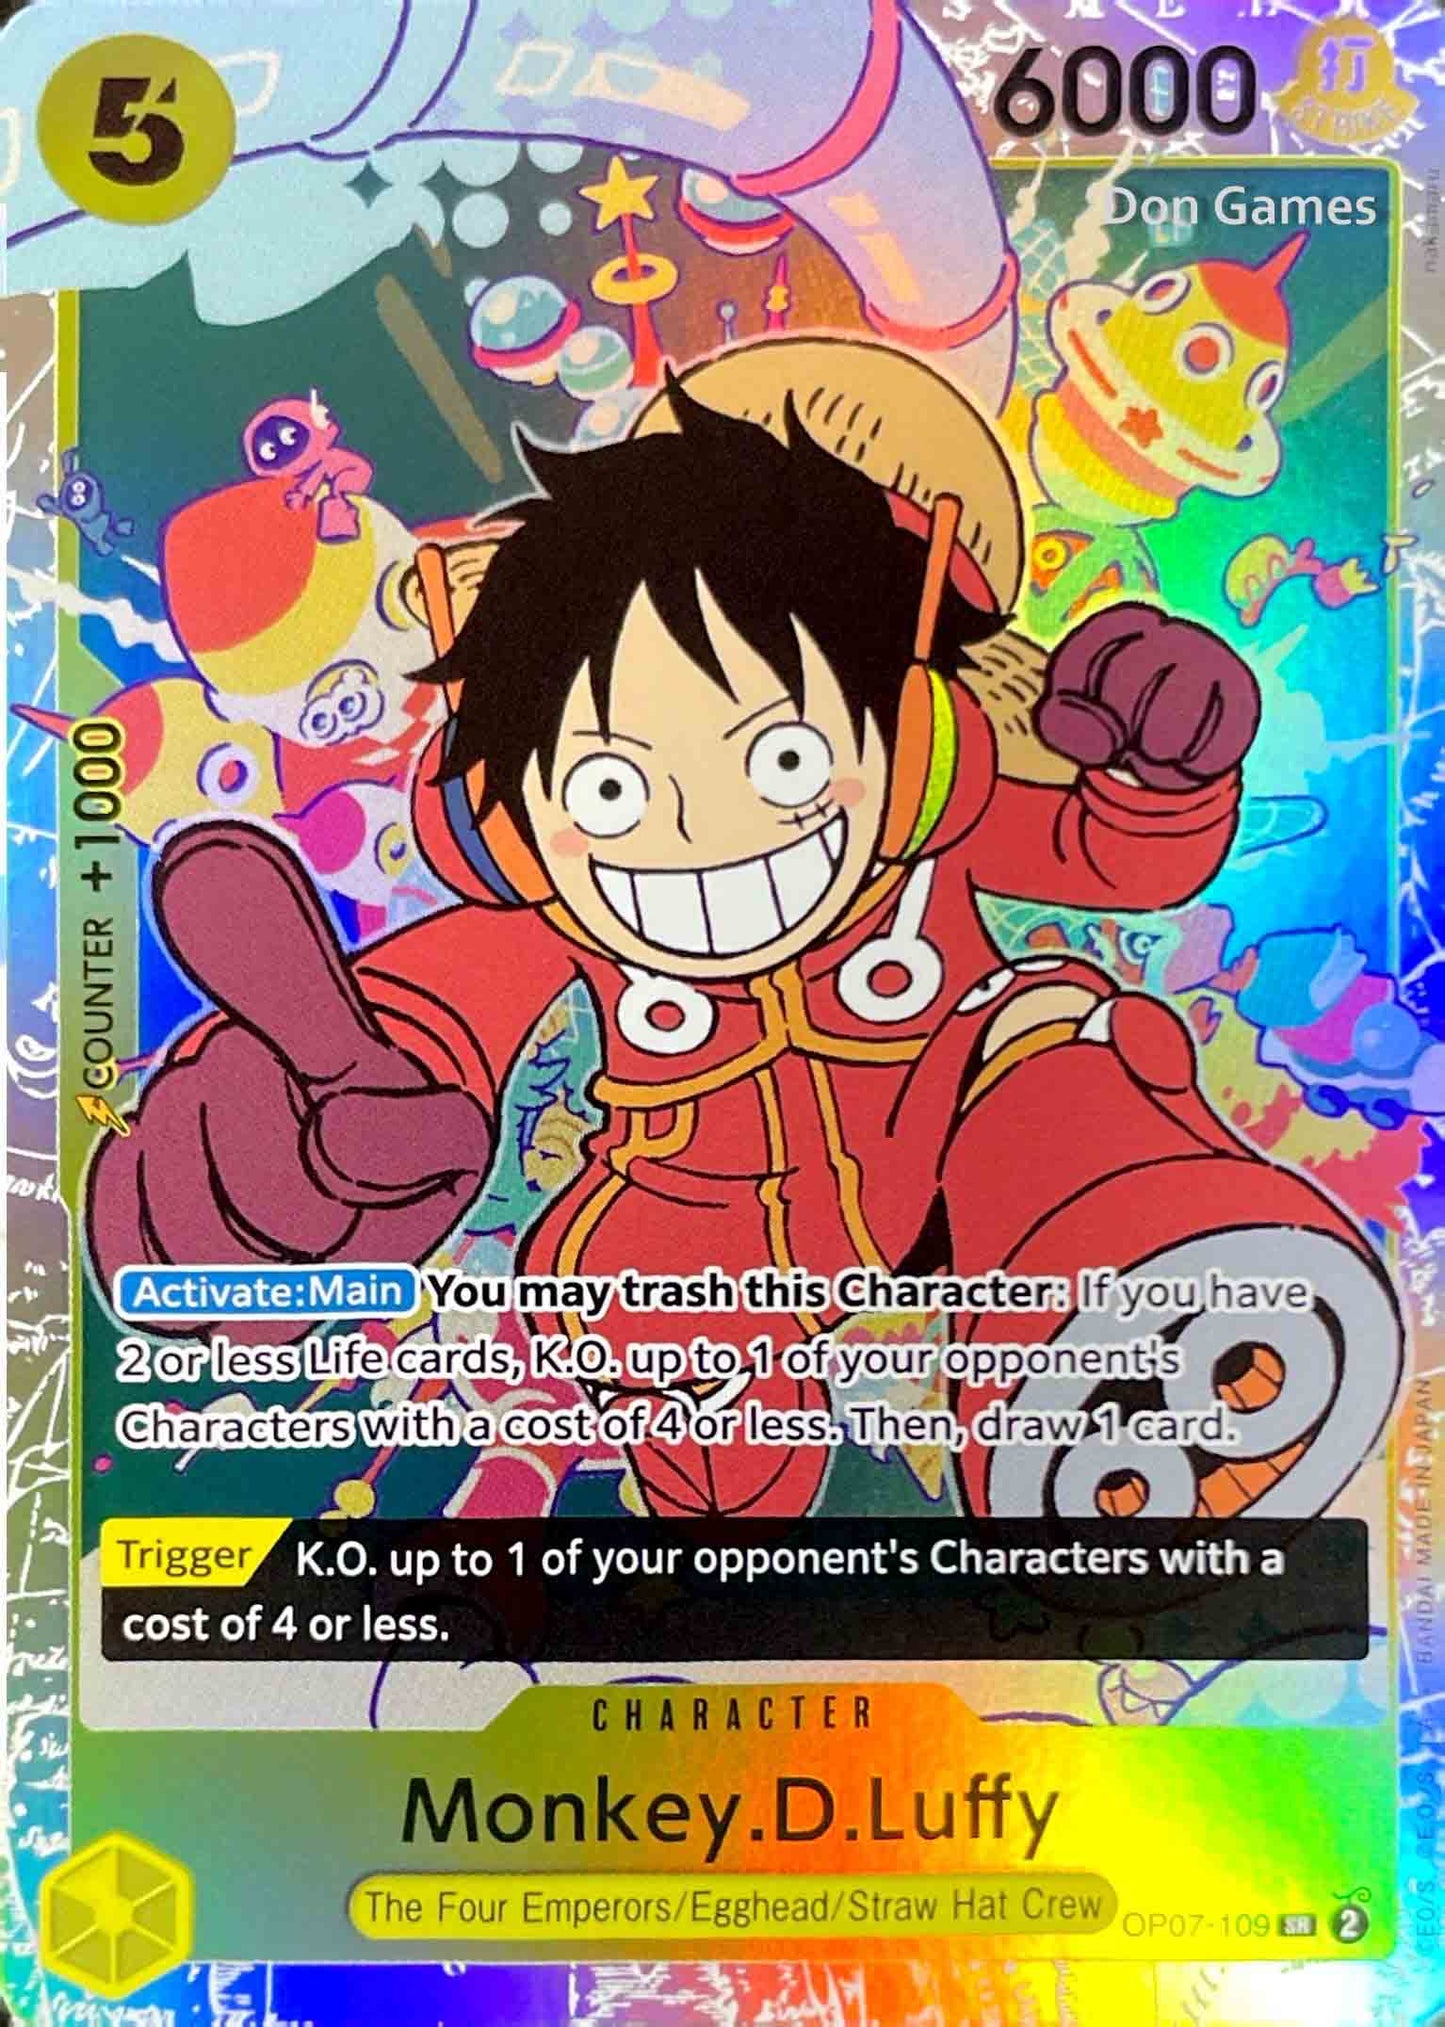 OP07-109 Monkey. D. Luffy Character Card